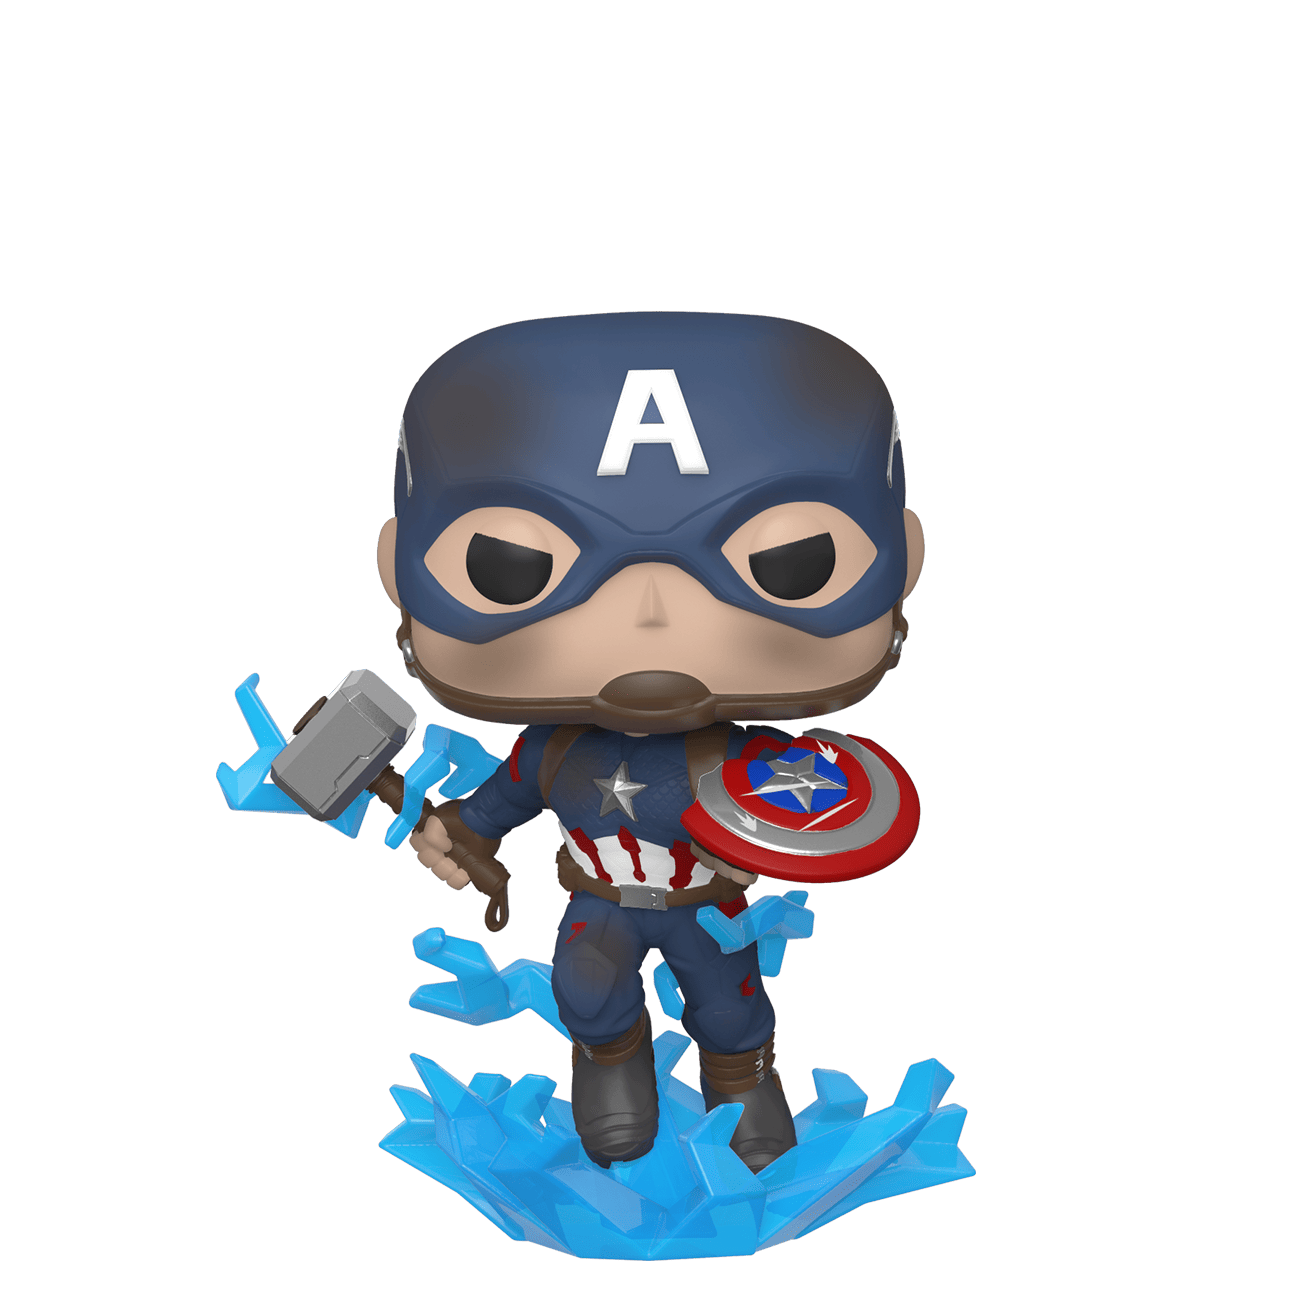 Buy Pop! Captain America at Funko.